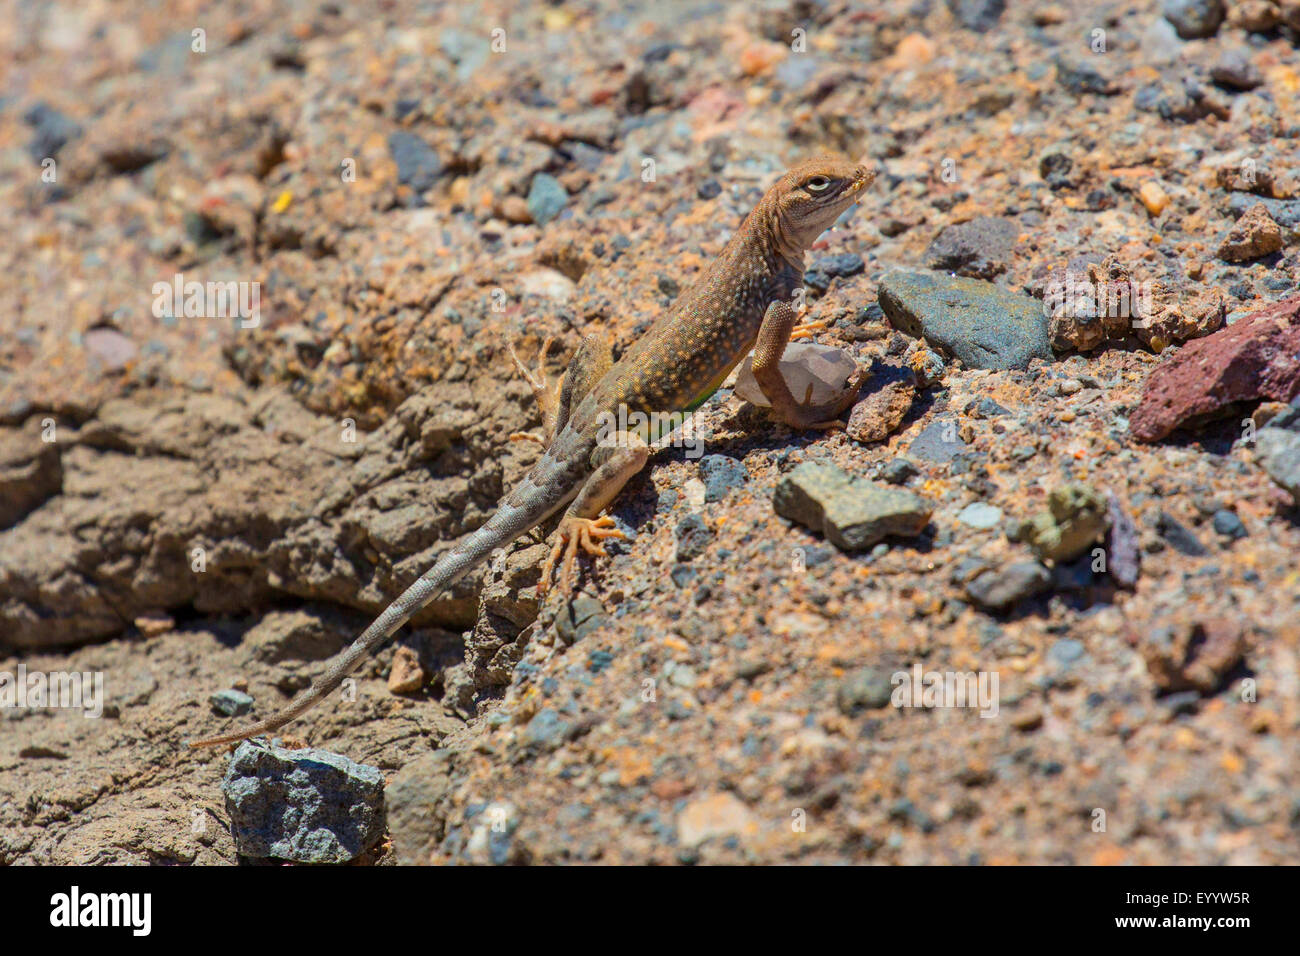 Greater earless lizard  (Cophosaurus texanus), on a rock in its habitat, USA, Arizona, Salt River Stock Photo